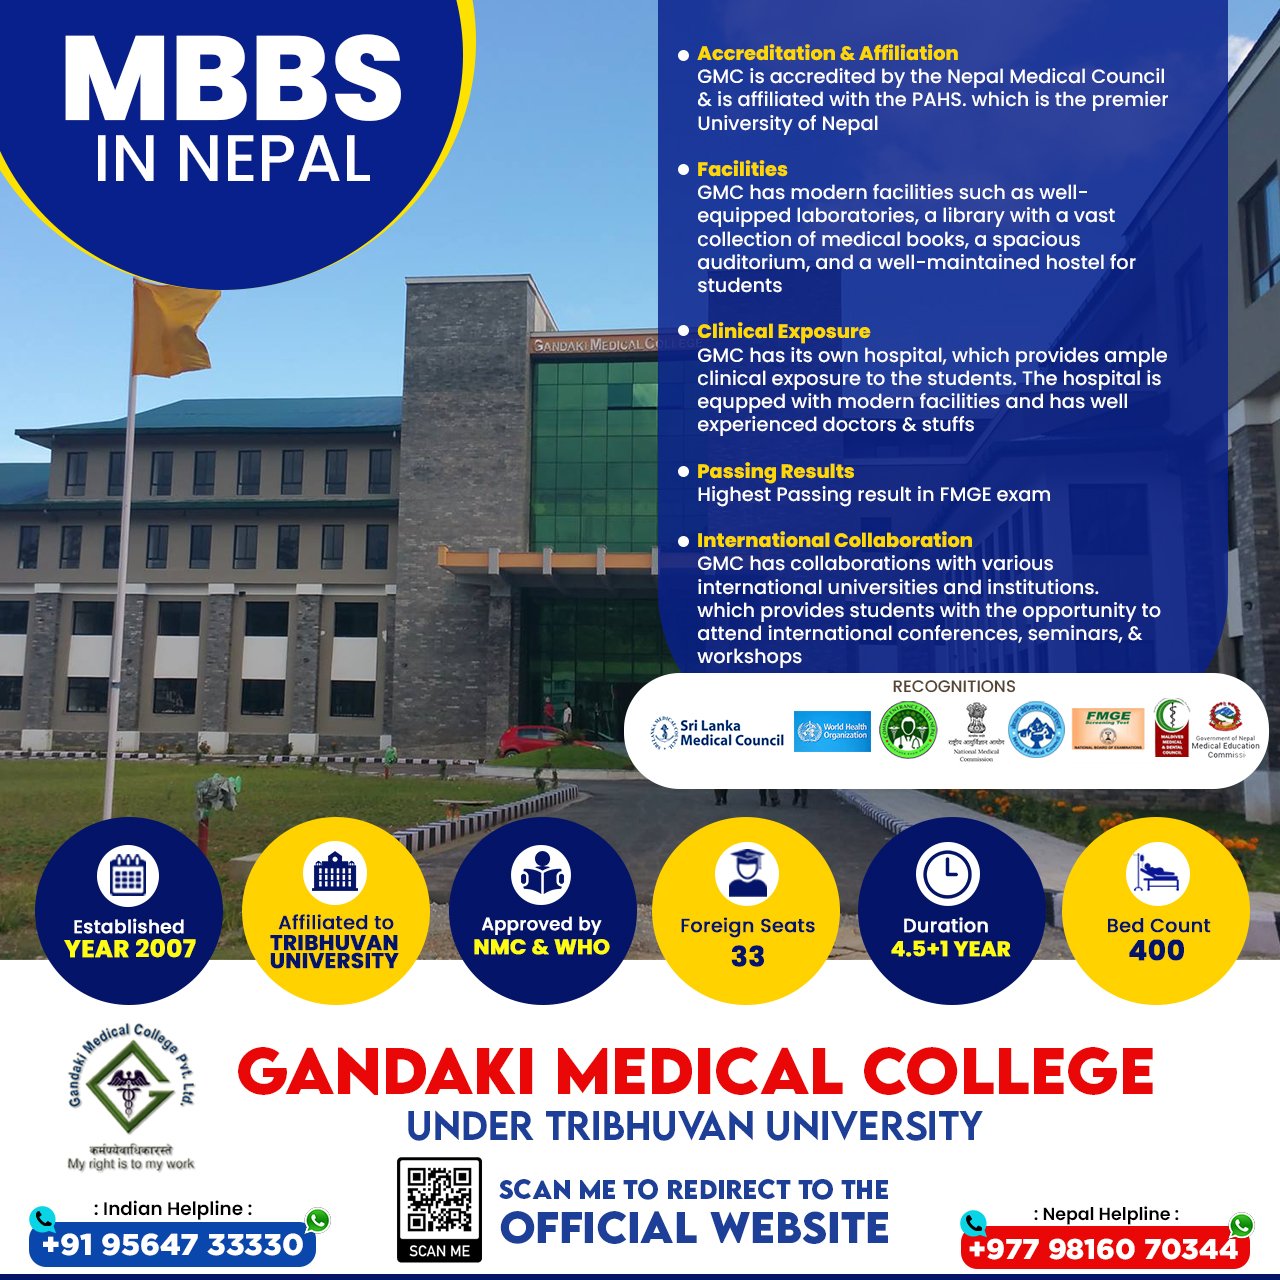 mbbs-in-nepal-at-gandaki-medical-college-under-tribhuvan-university